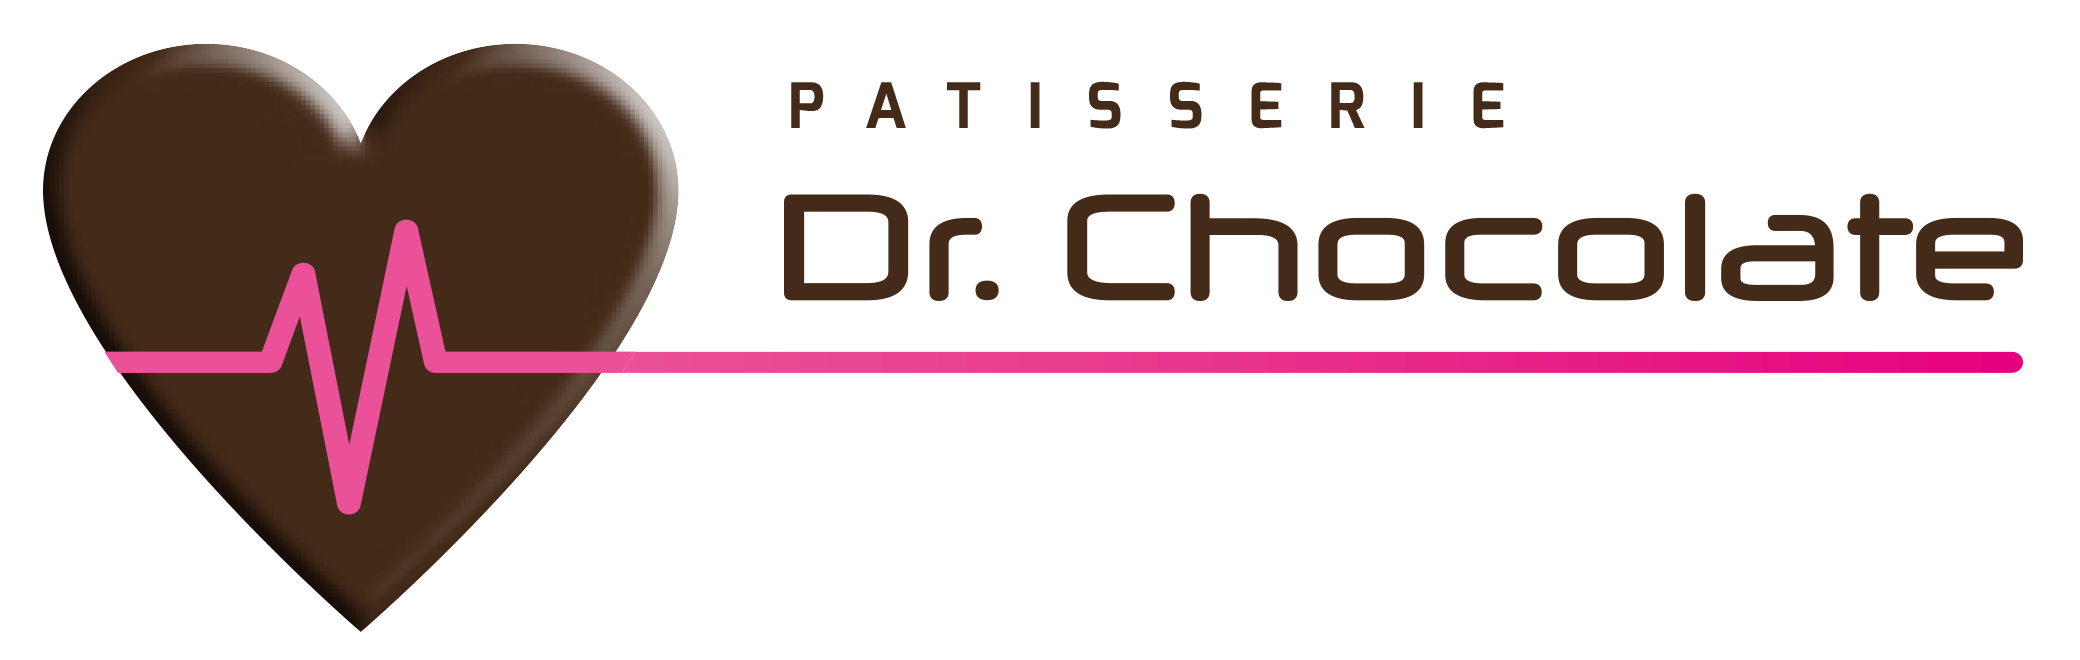 Dr. Chocolate